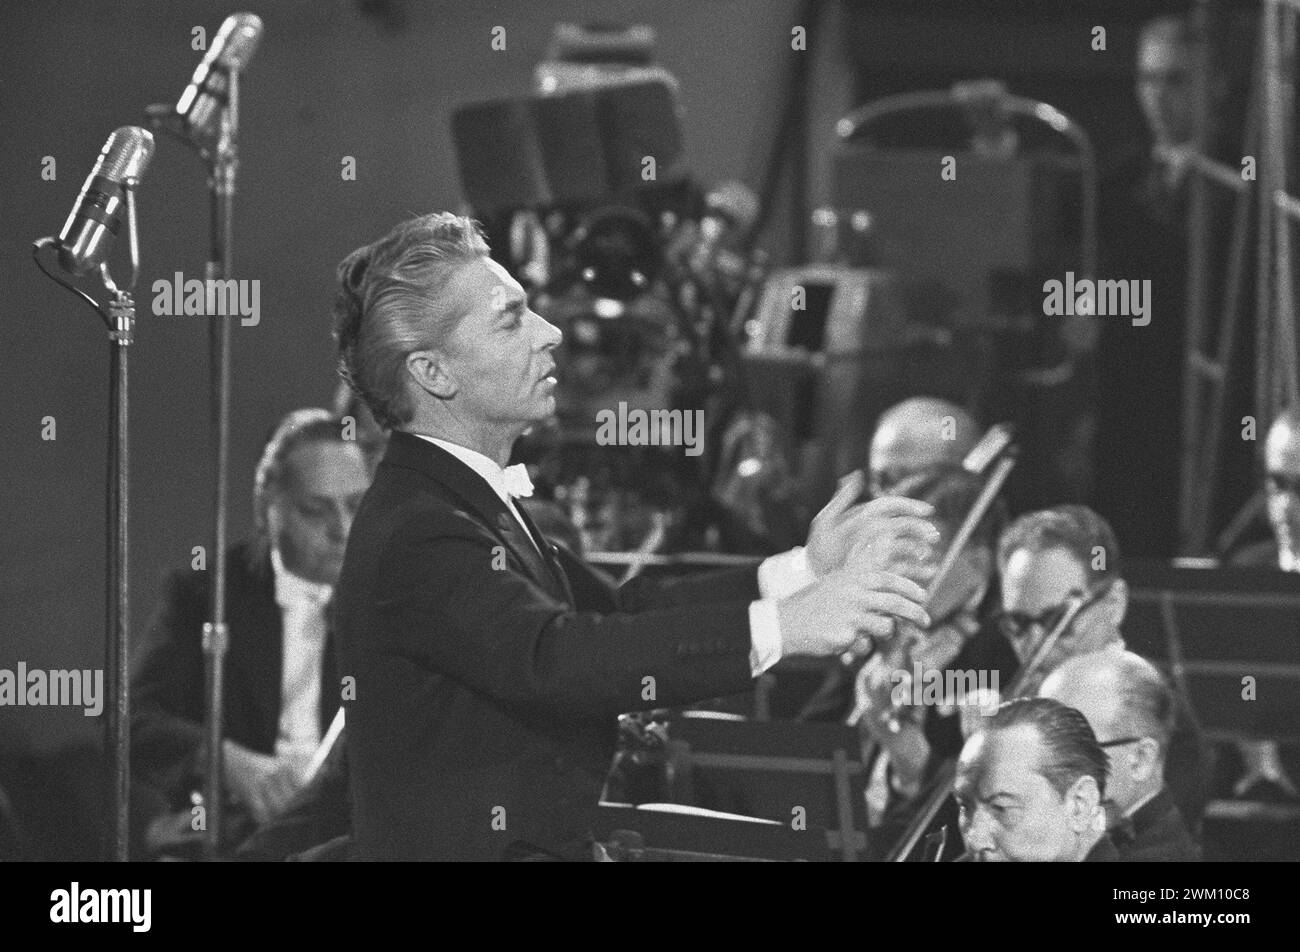 3823933 Herbert von Karajan; (add.info.: Rome, about 1960. Music conductor Herbert von Karajan during a performance / Roma 1960 circa. Herbert von Karajan mentre dirige - Marcello Mencarini Historical Archives); © Marcello Mencarini. All rights reserved 2024. Stock Photo